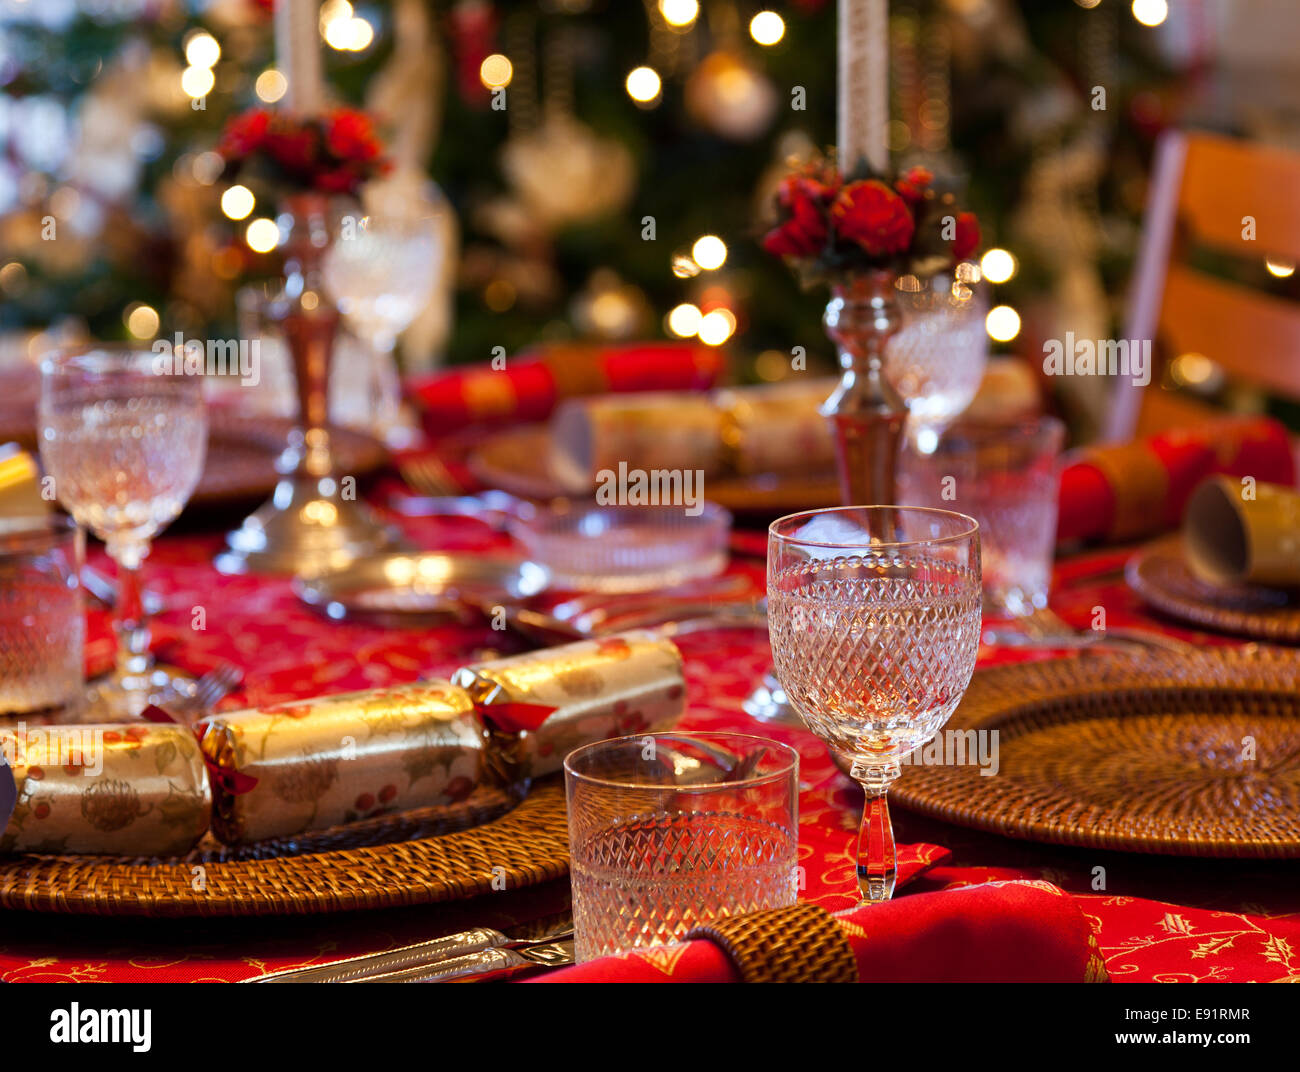 English Christmas table with crackers Stock Photo - Alamy